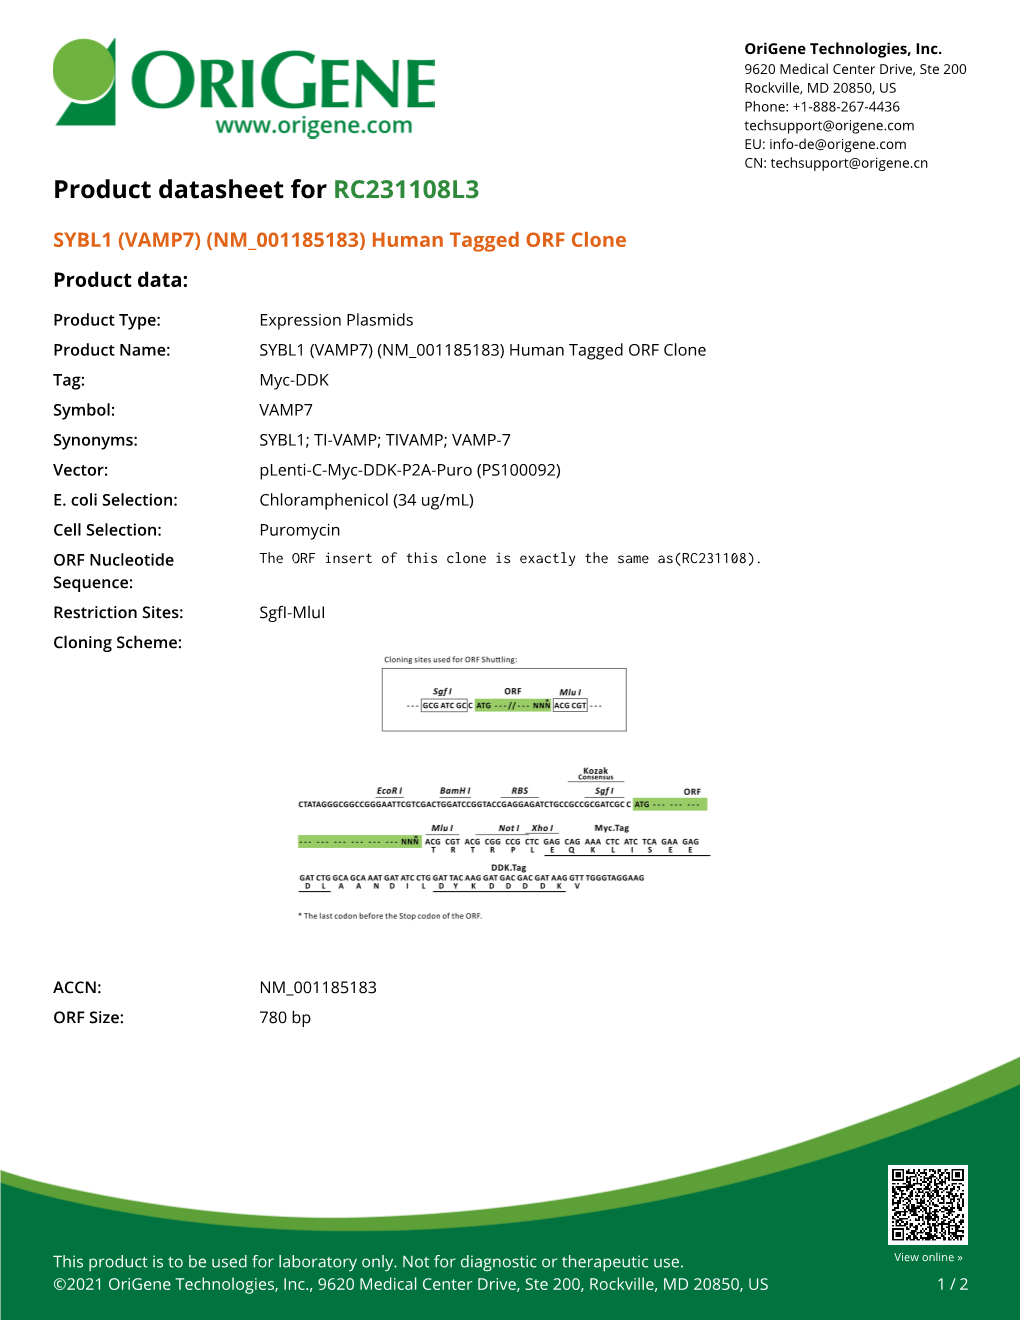 SYBL1 (VAMP7) (NM 001185183) Human Tagged ORF Clone Product Data